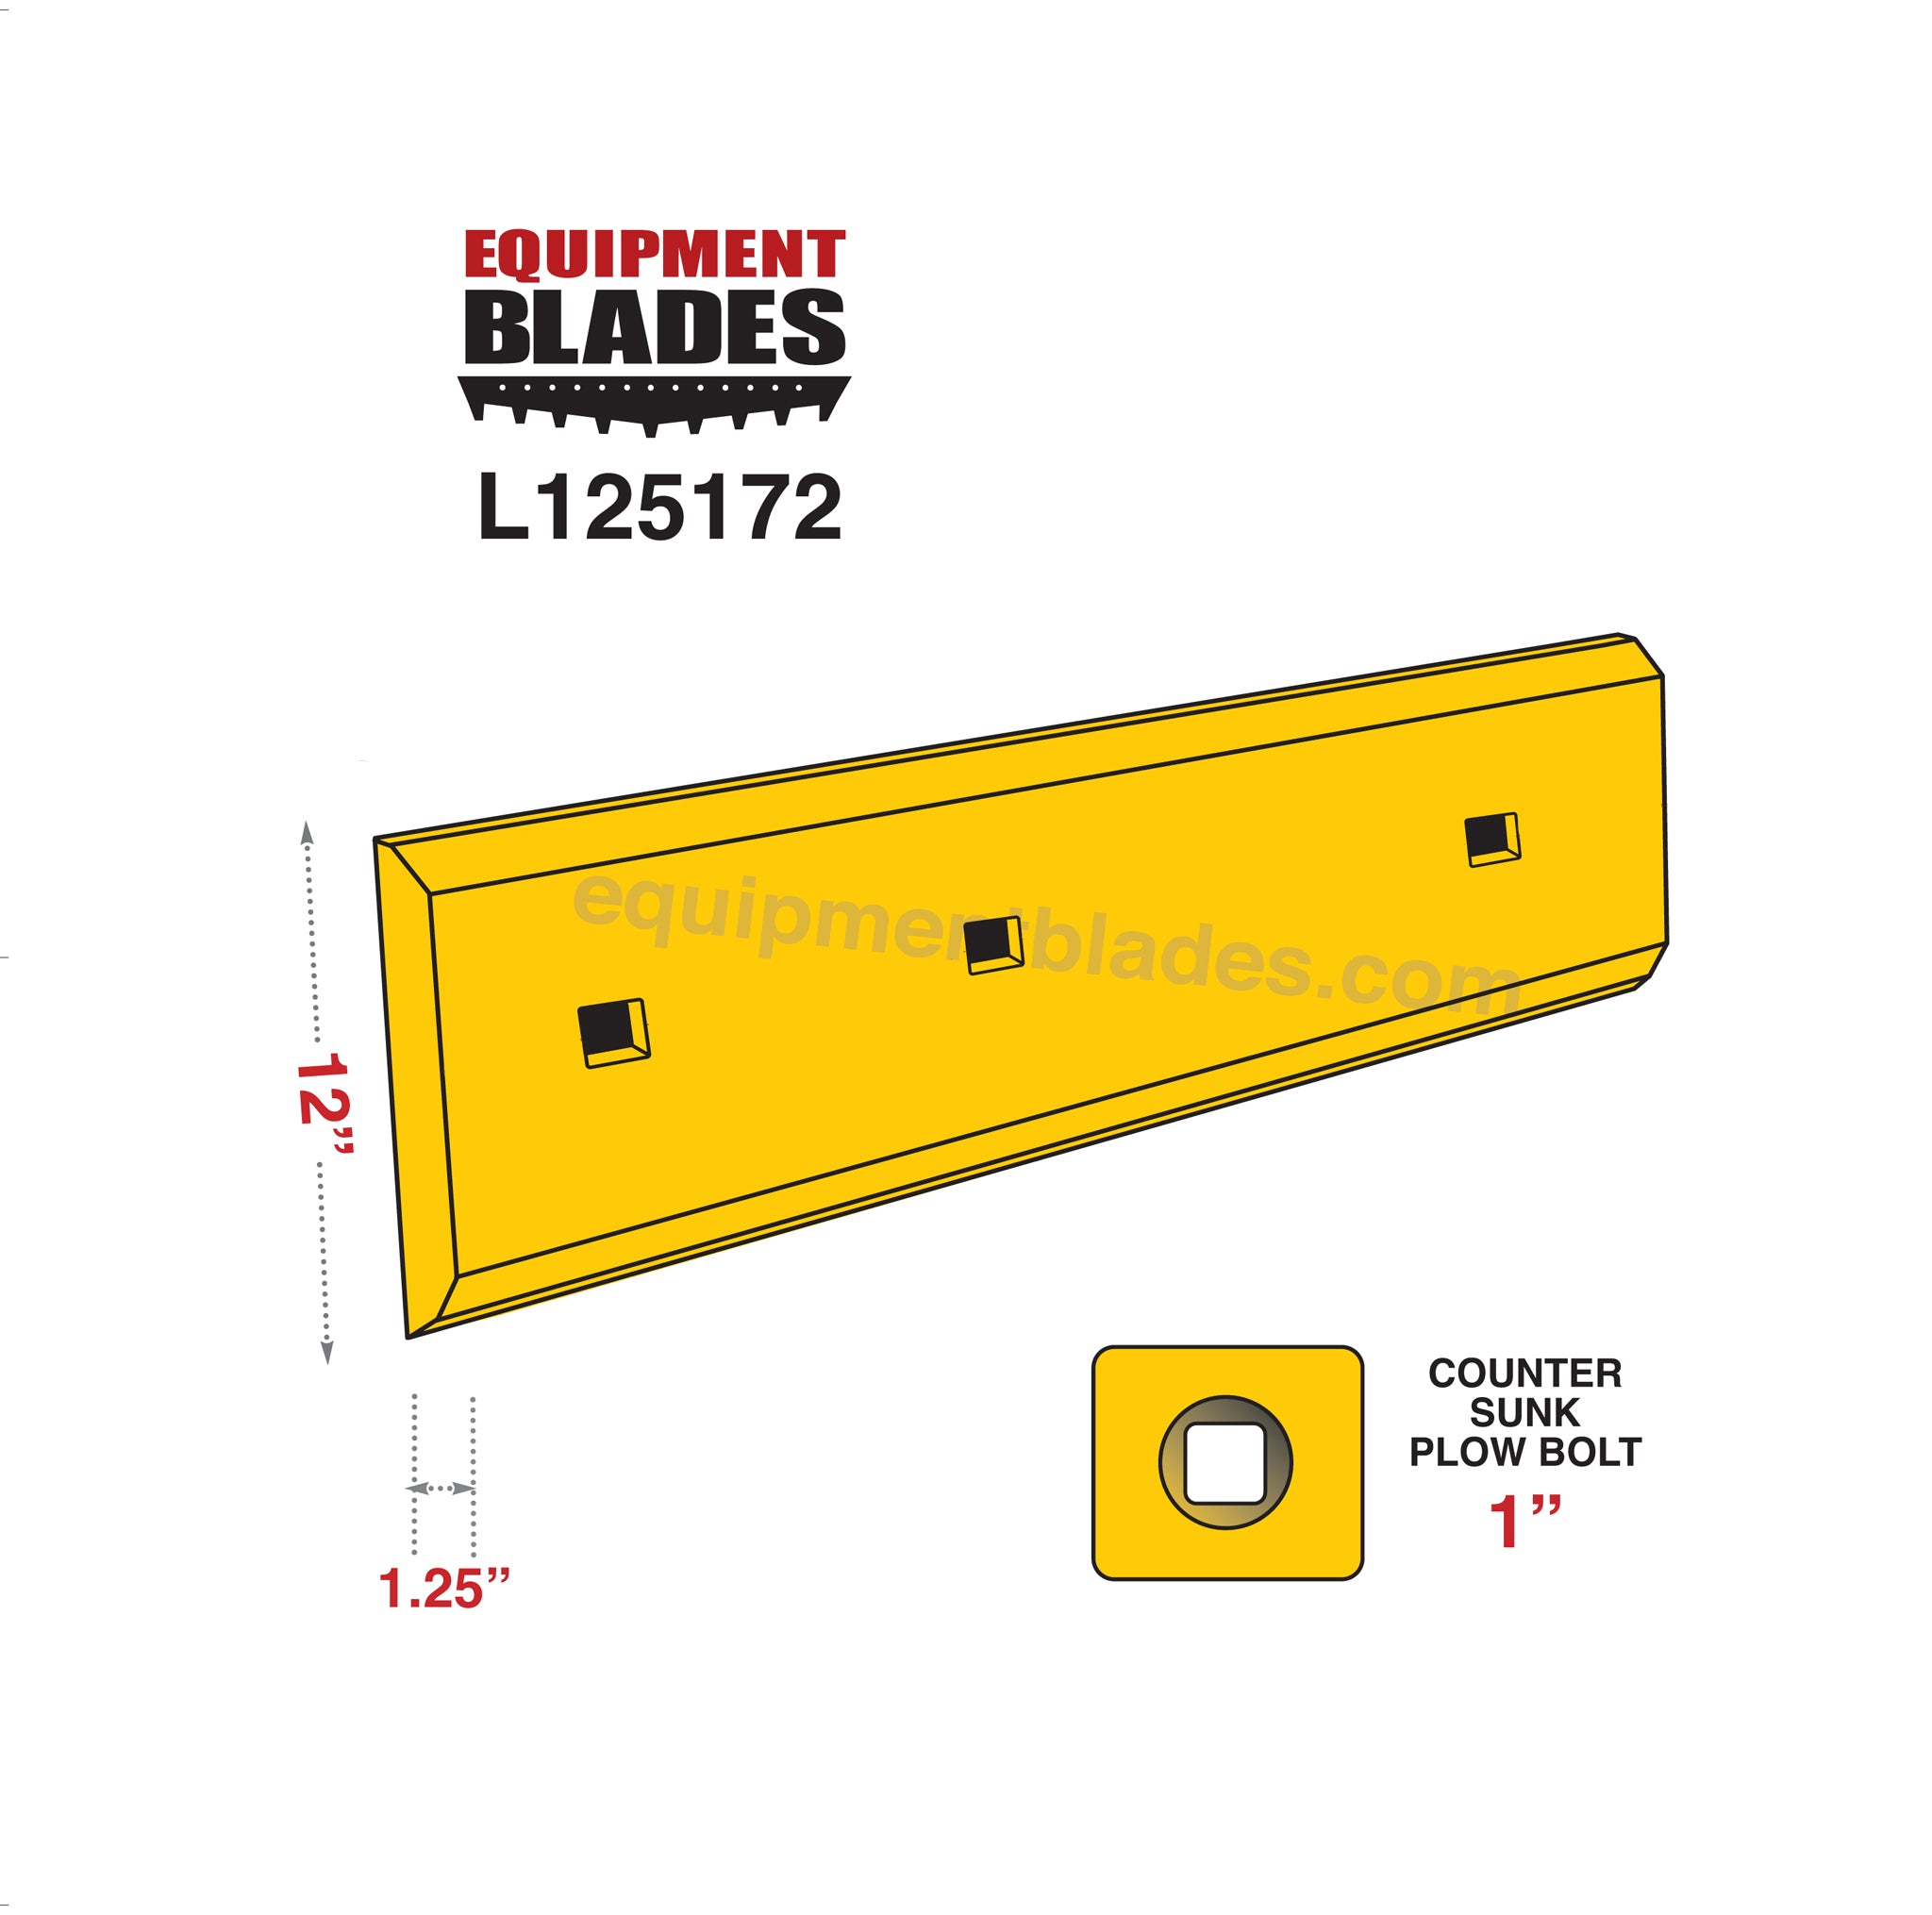 CAS L125172-Equipment Blades Inc-Equipment Blades Inc